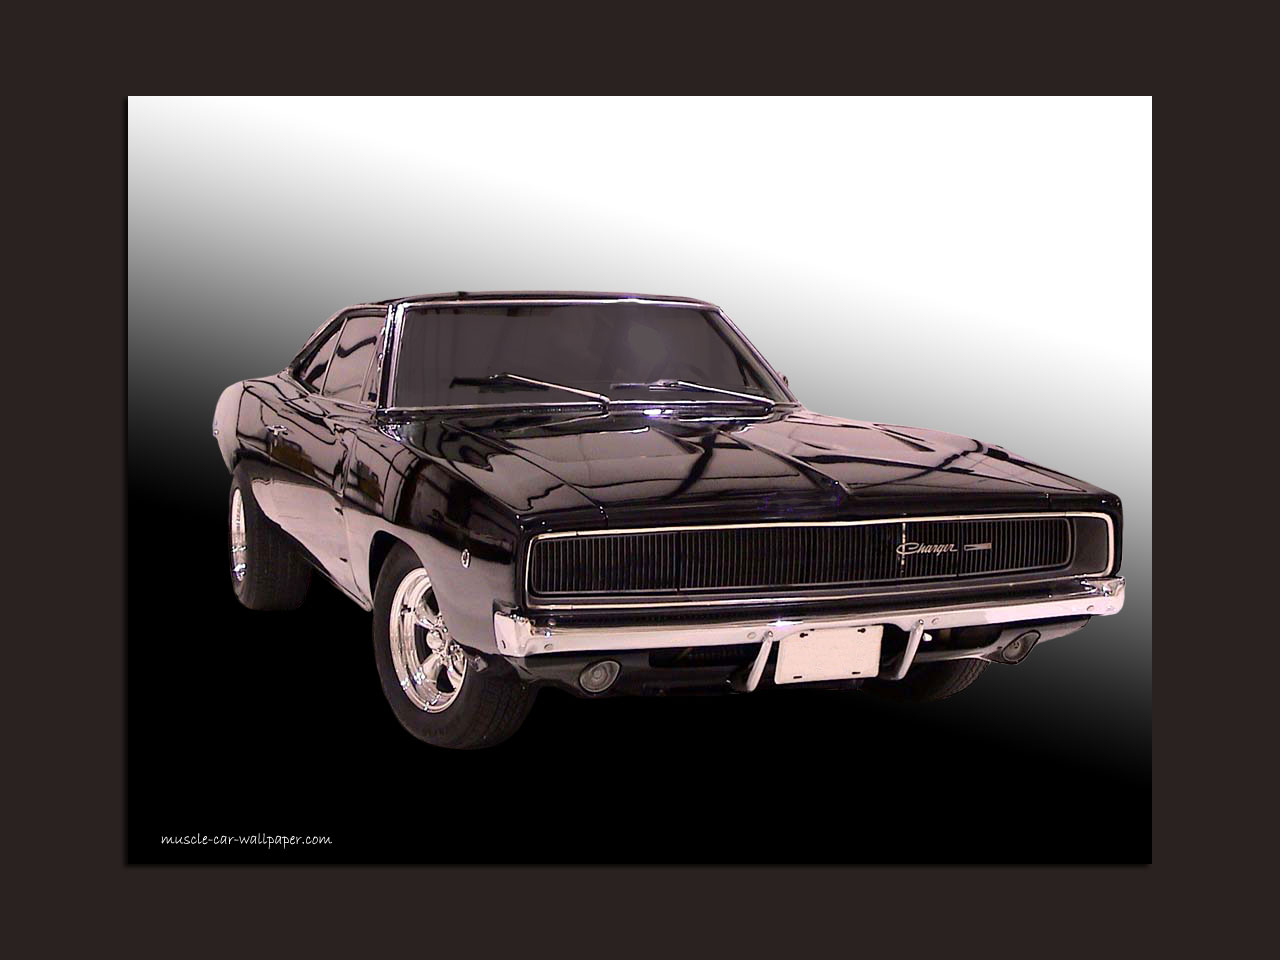 batt-mobile | Dream cars, 1968 dodge charger, Muscle cars